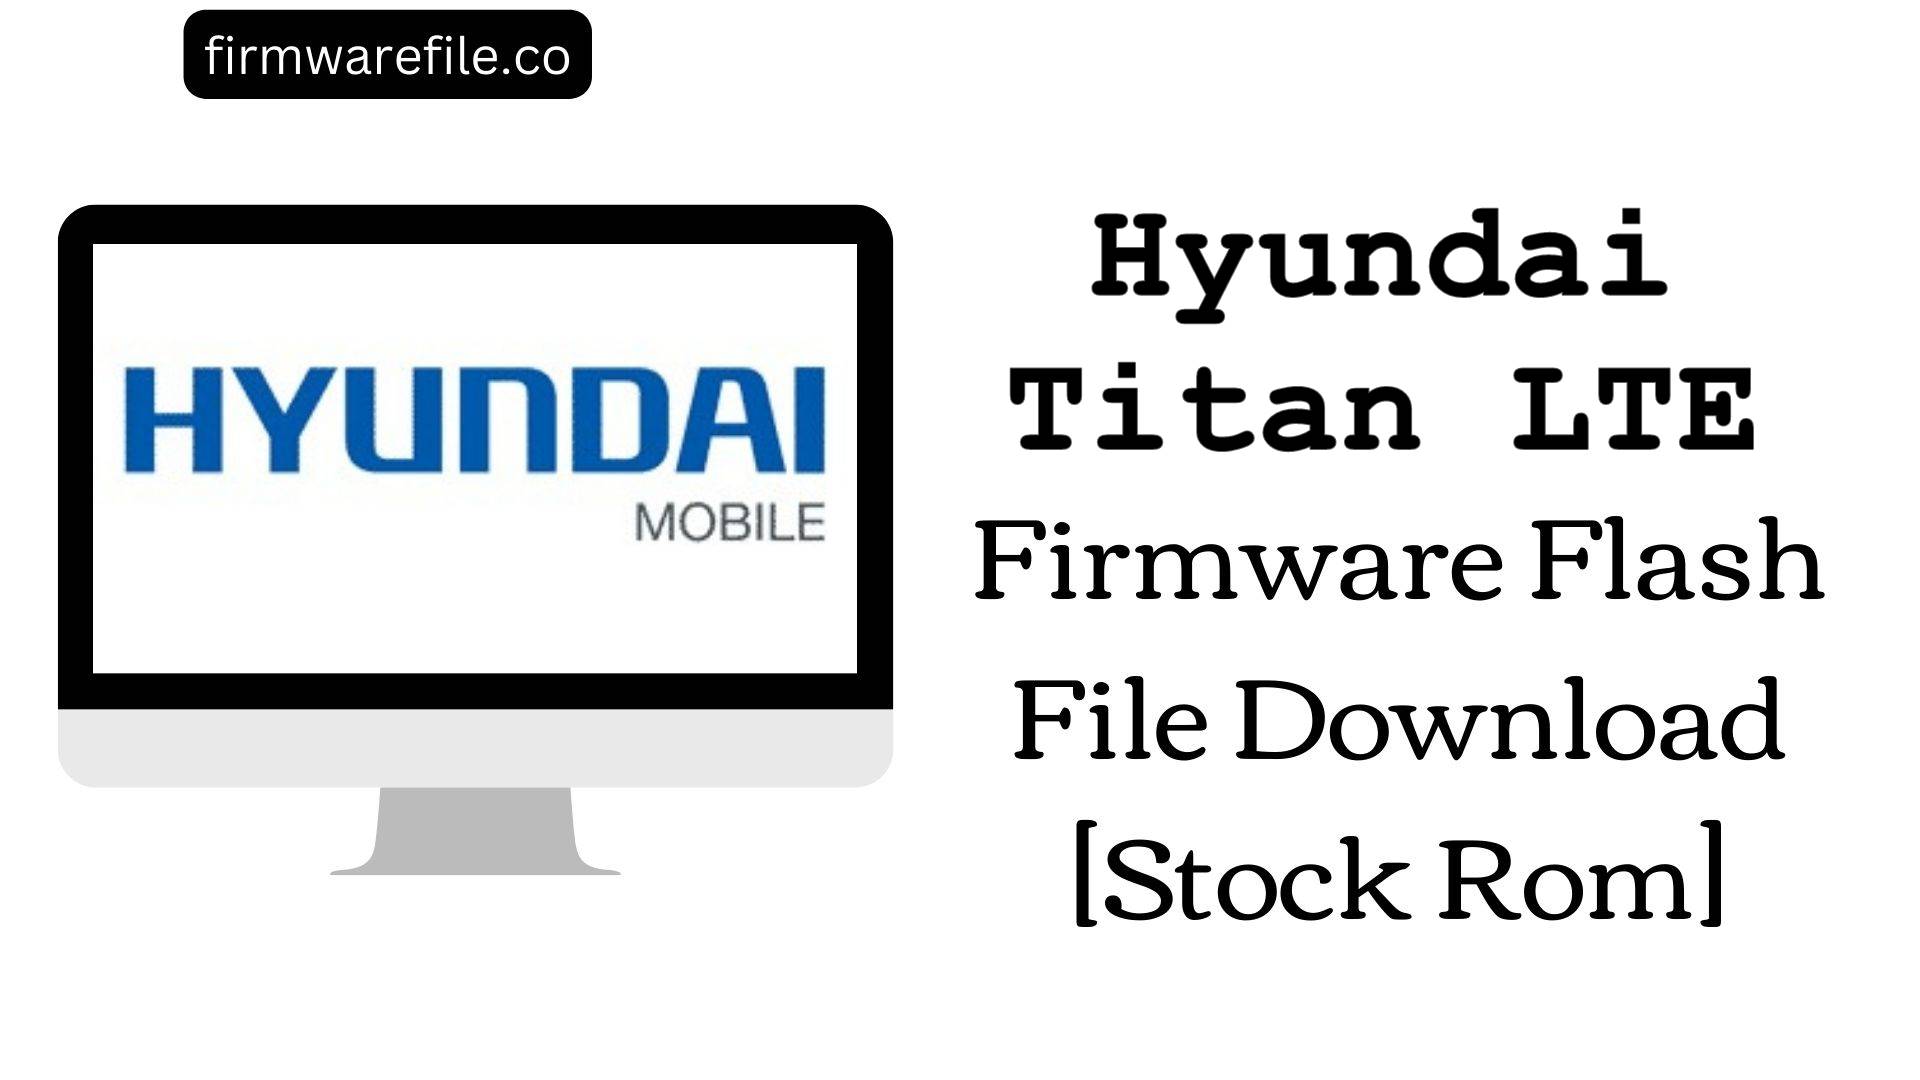 Hyundai Titan LTE